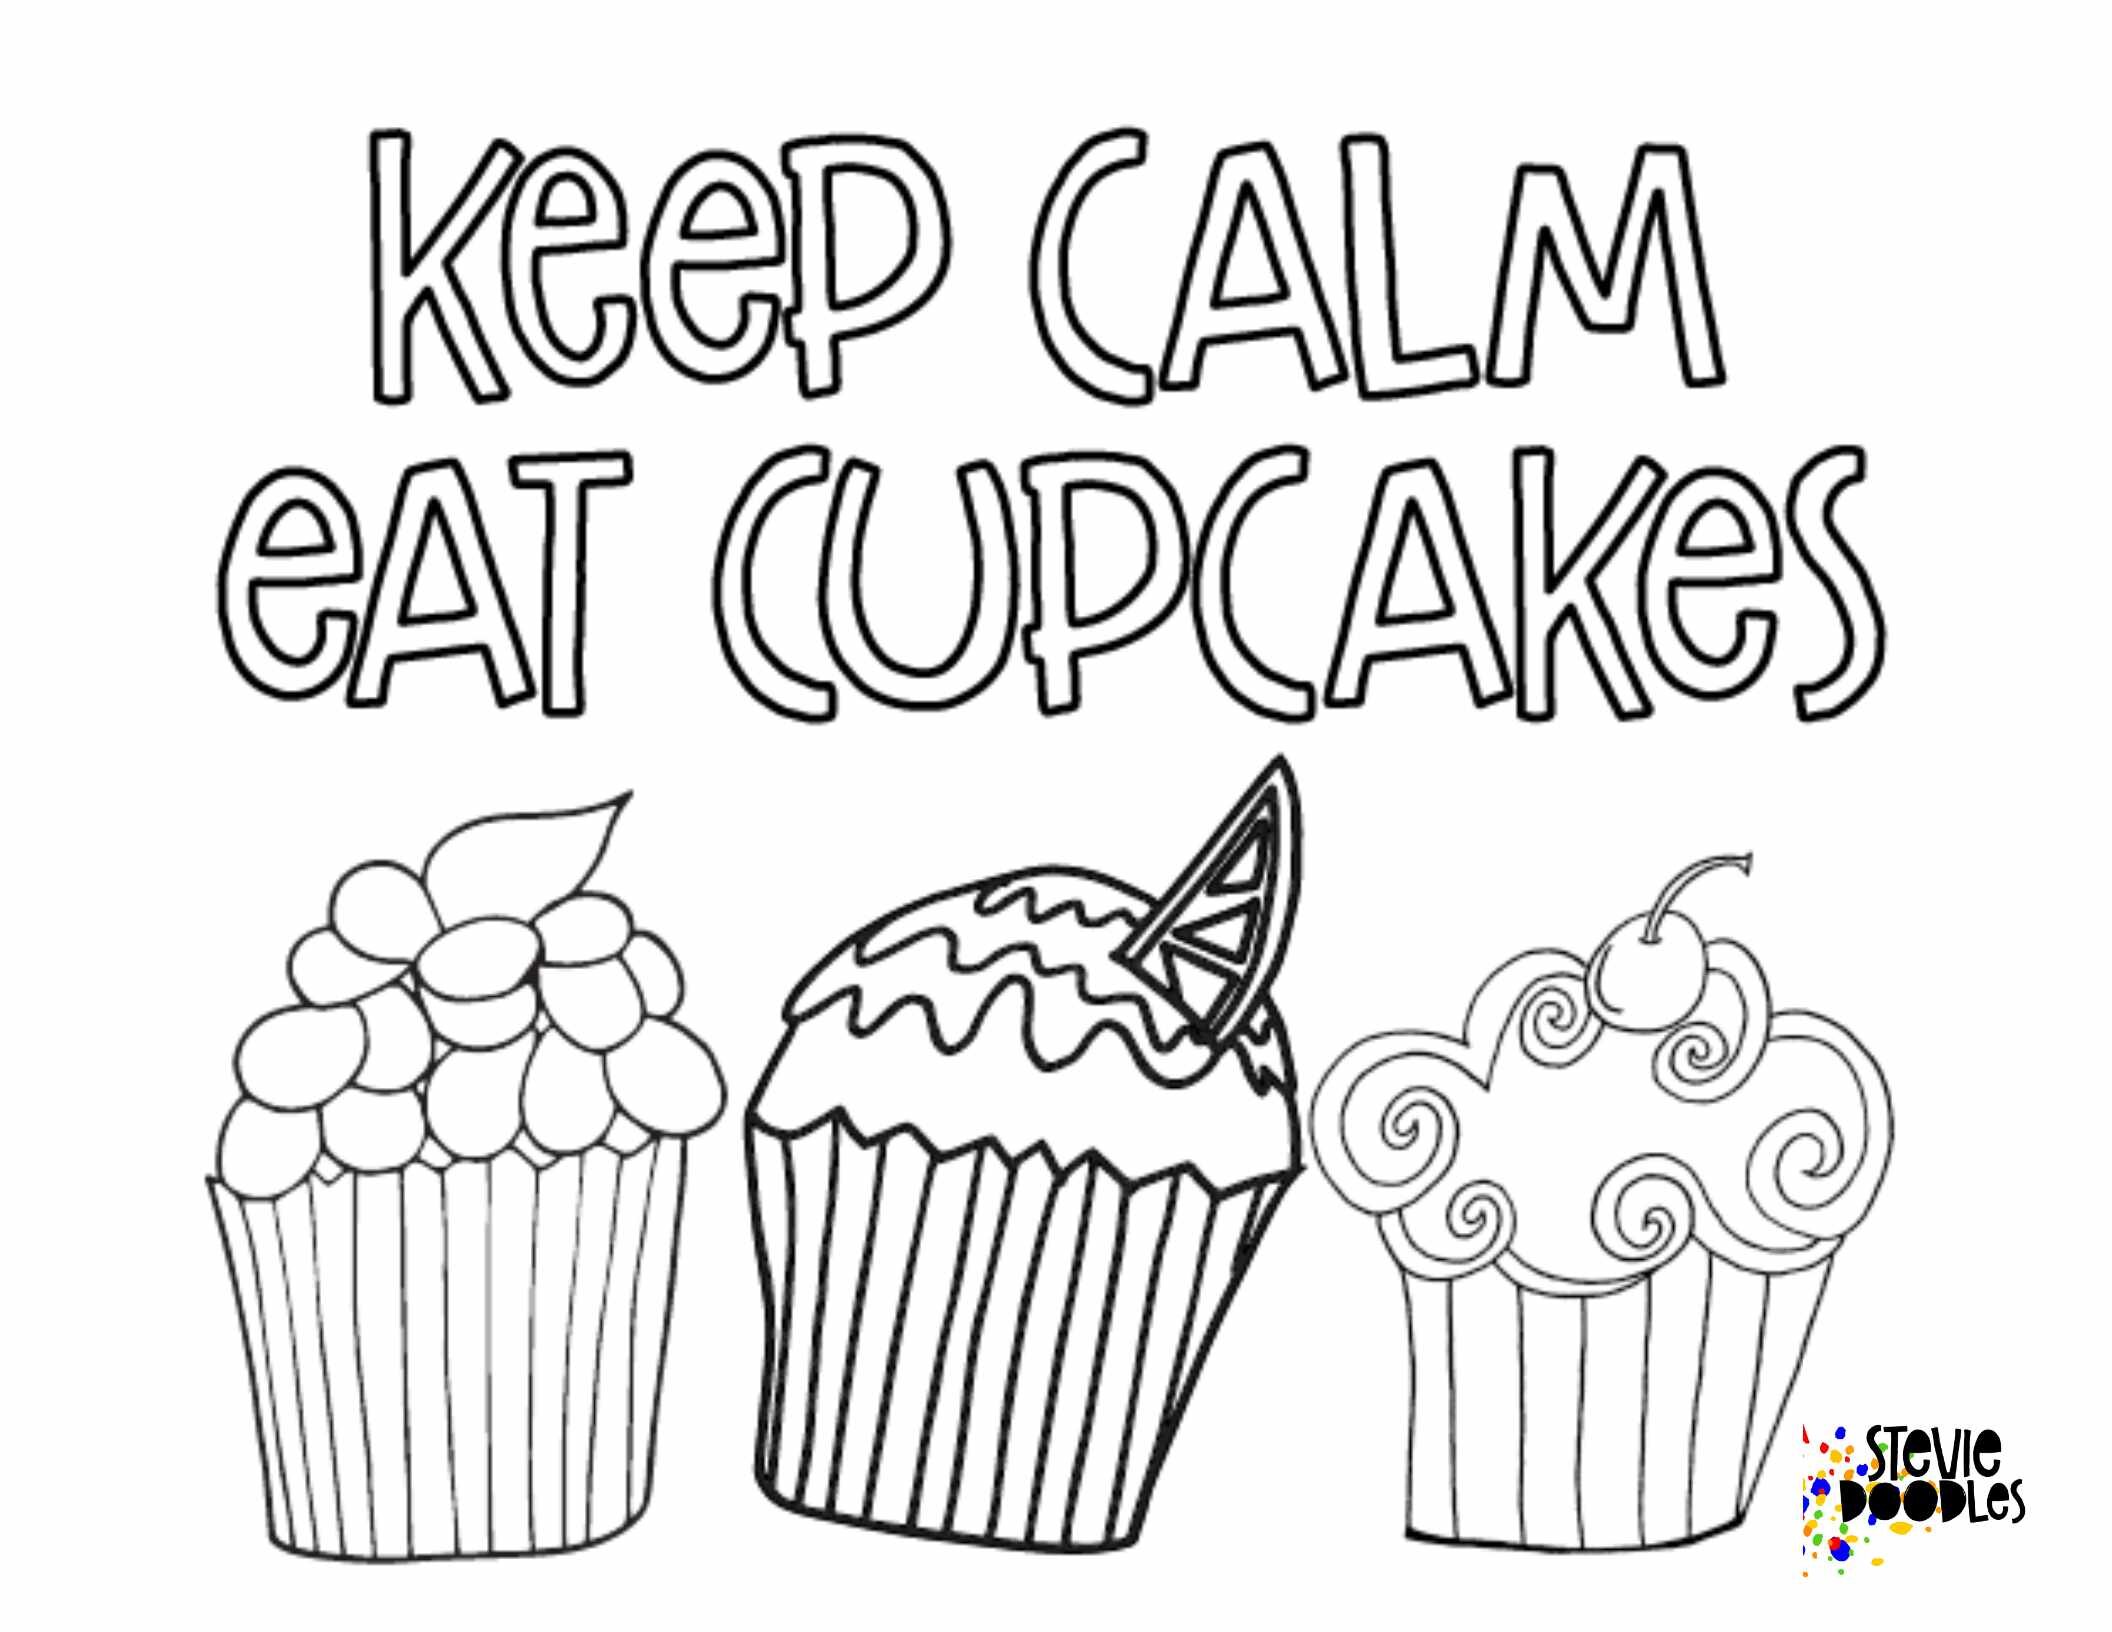 Free cupcake coloring pages â stevie doodles